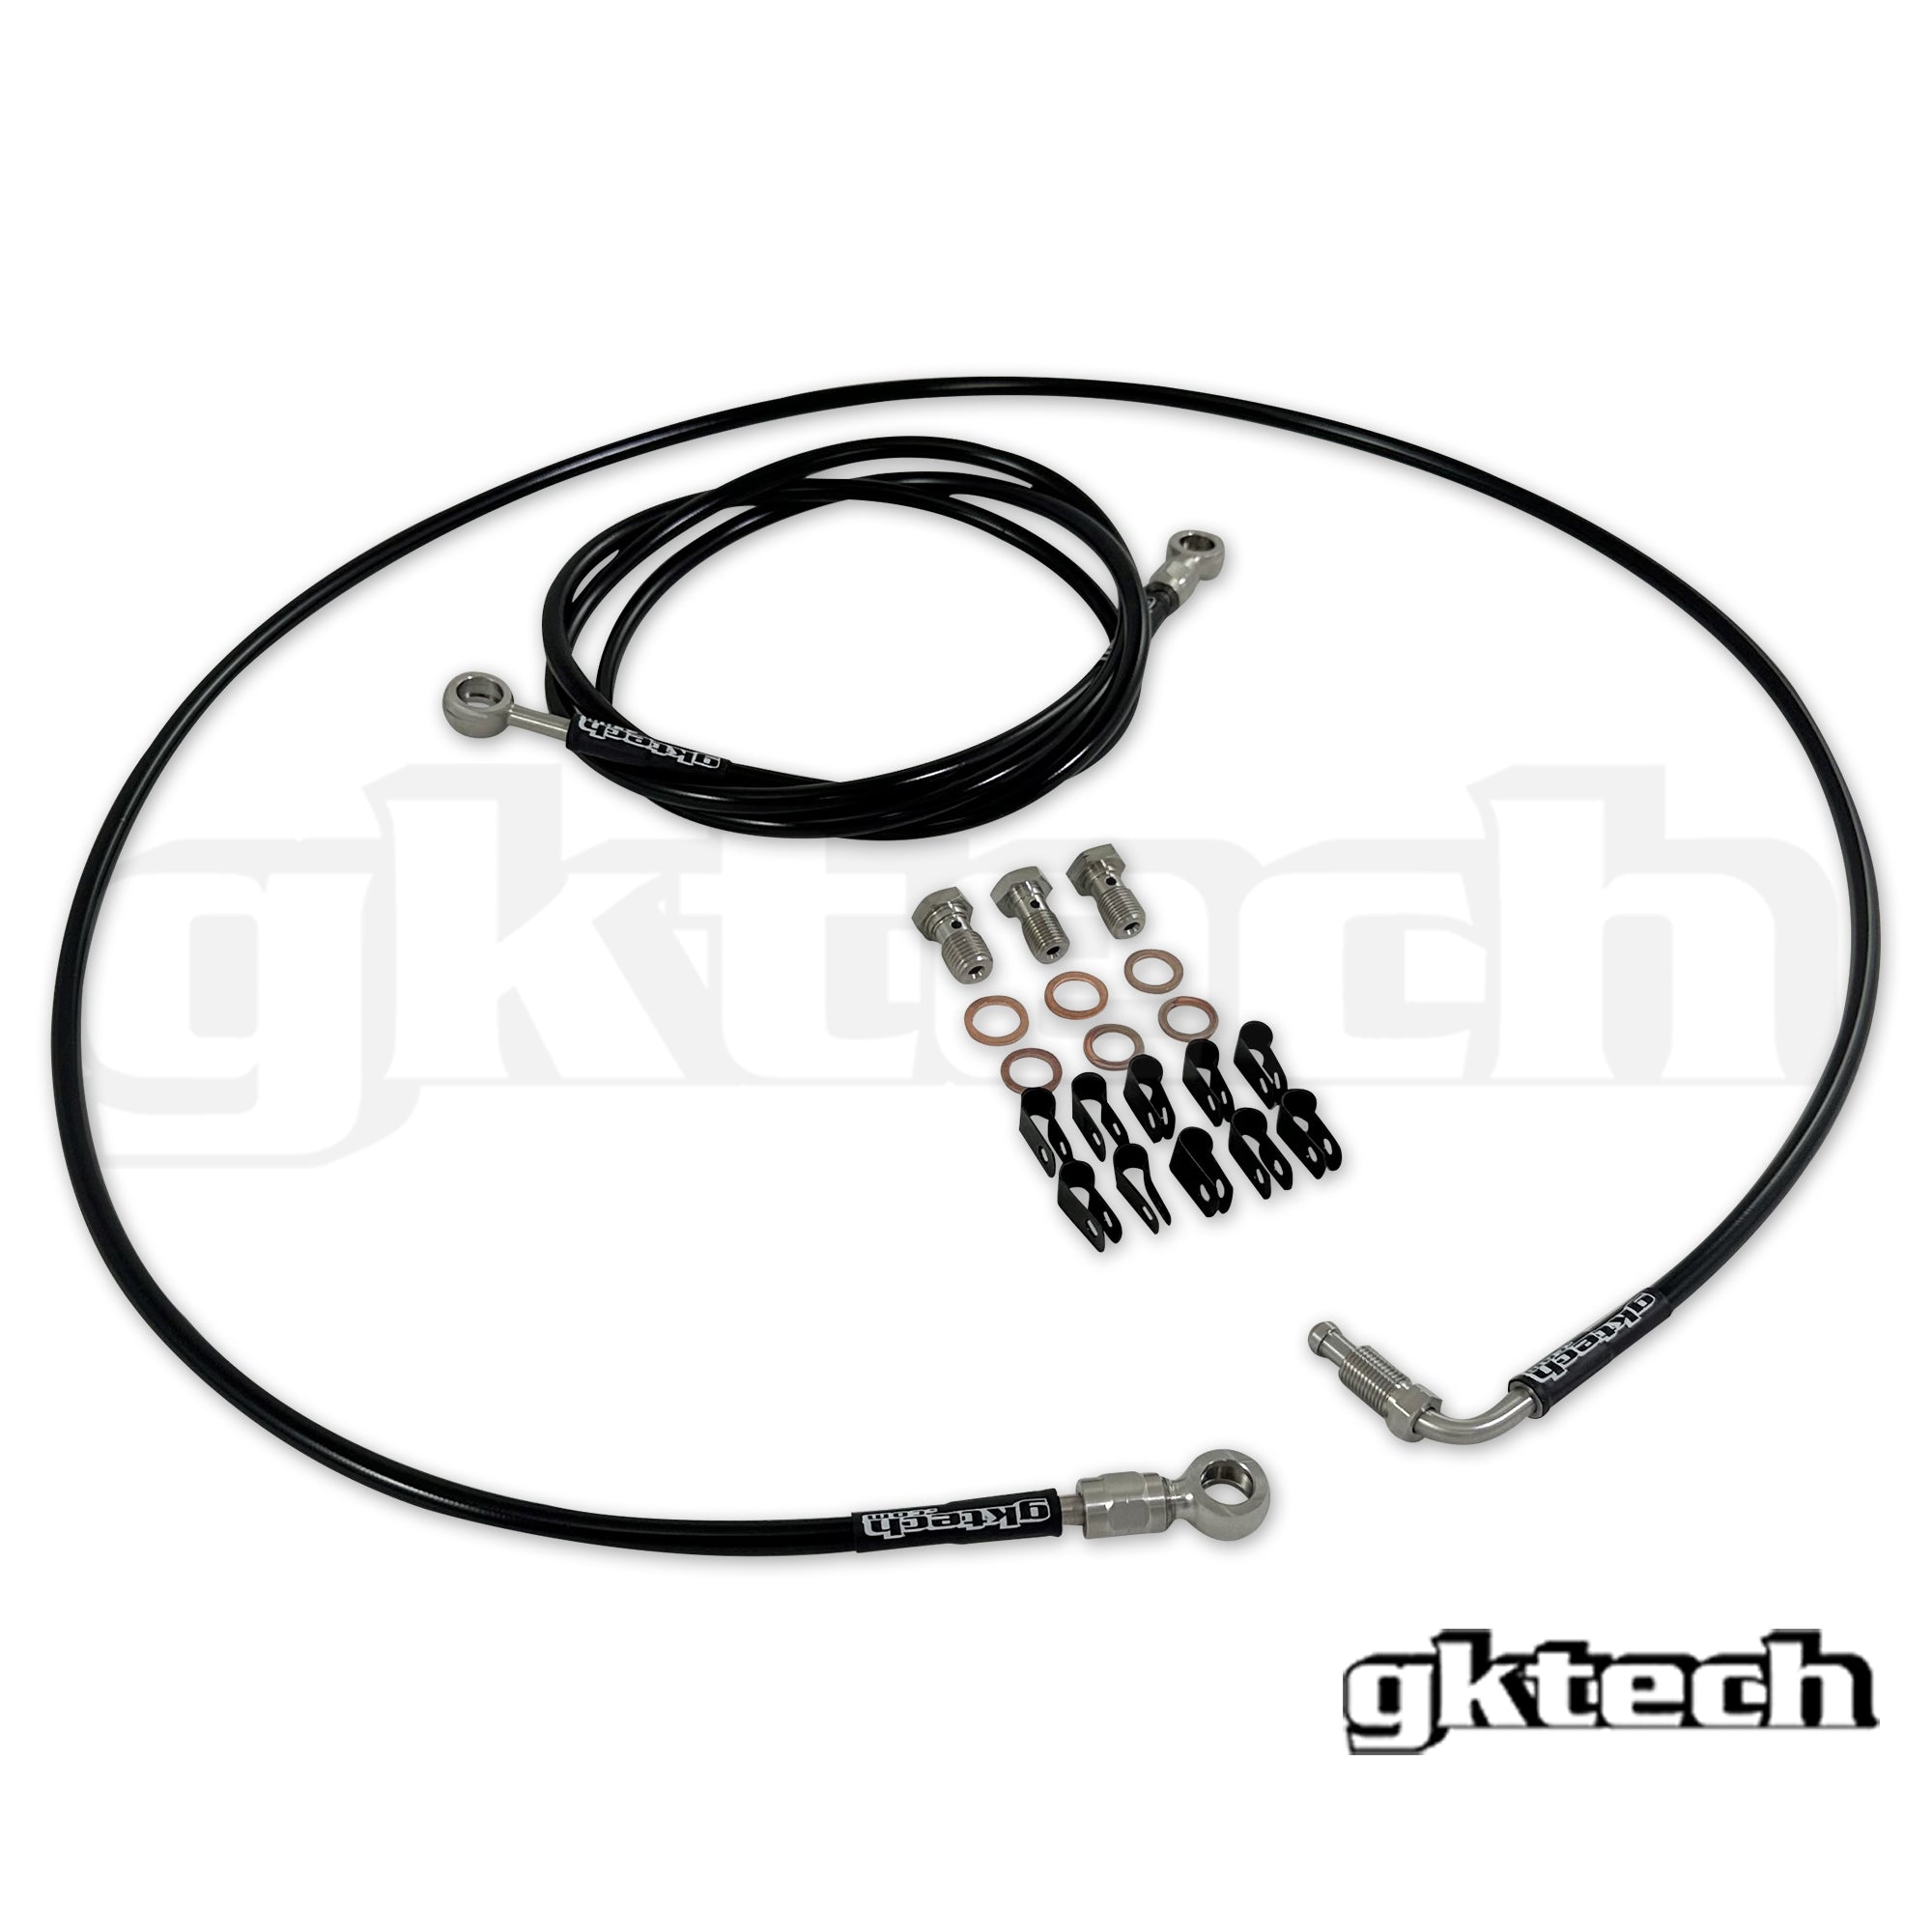 In-line braided brake line kit